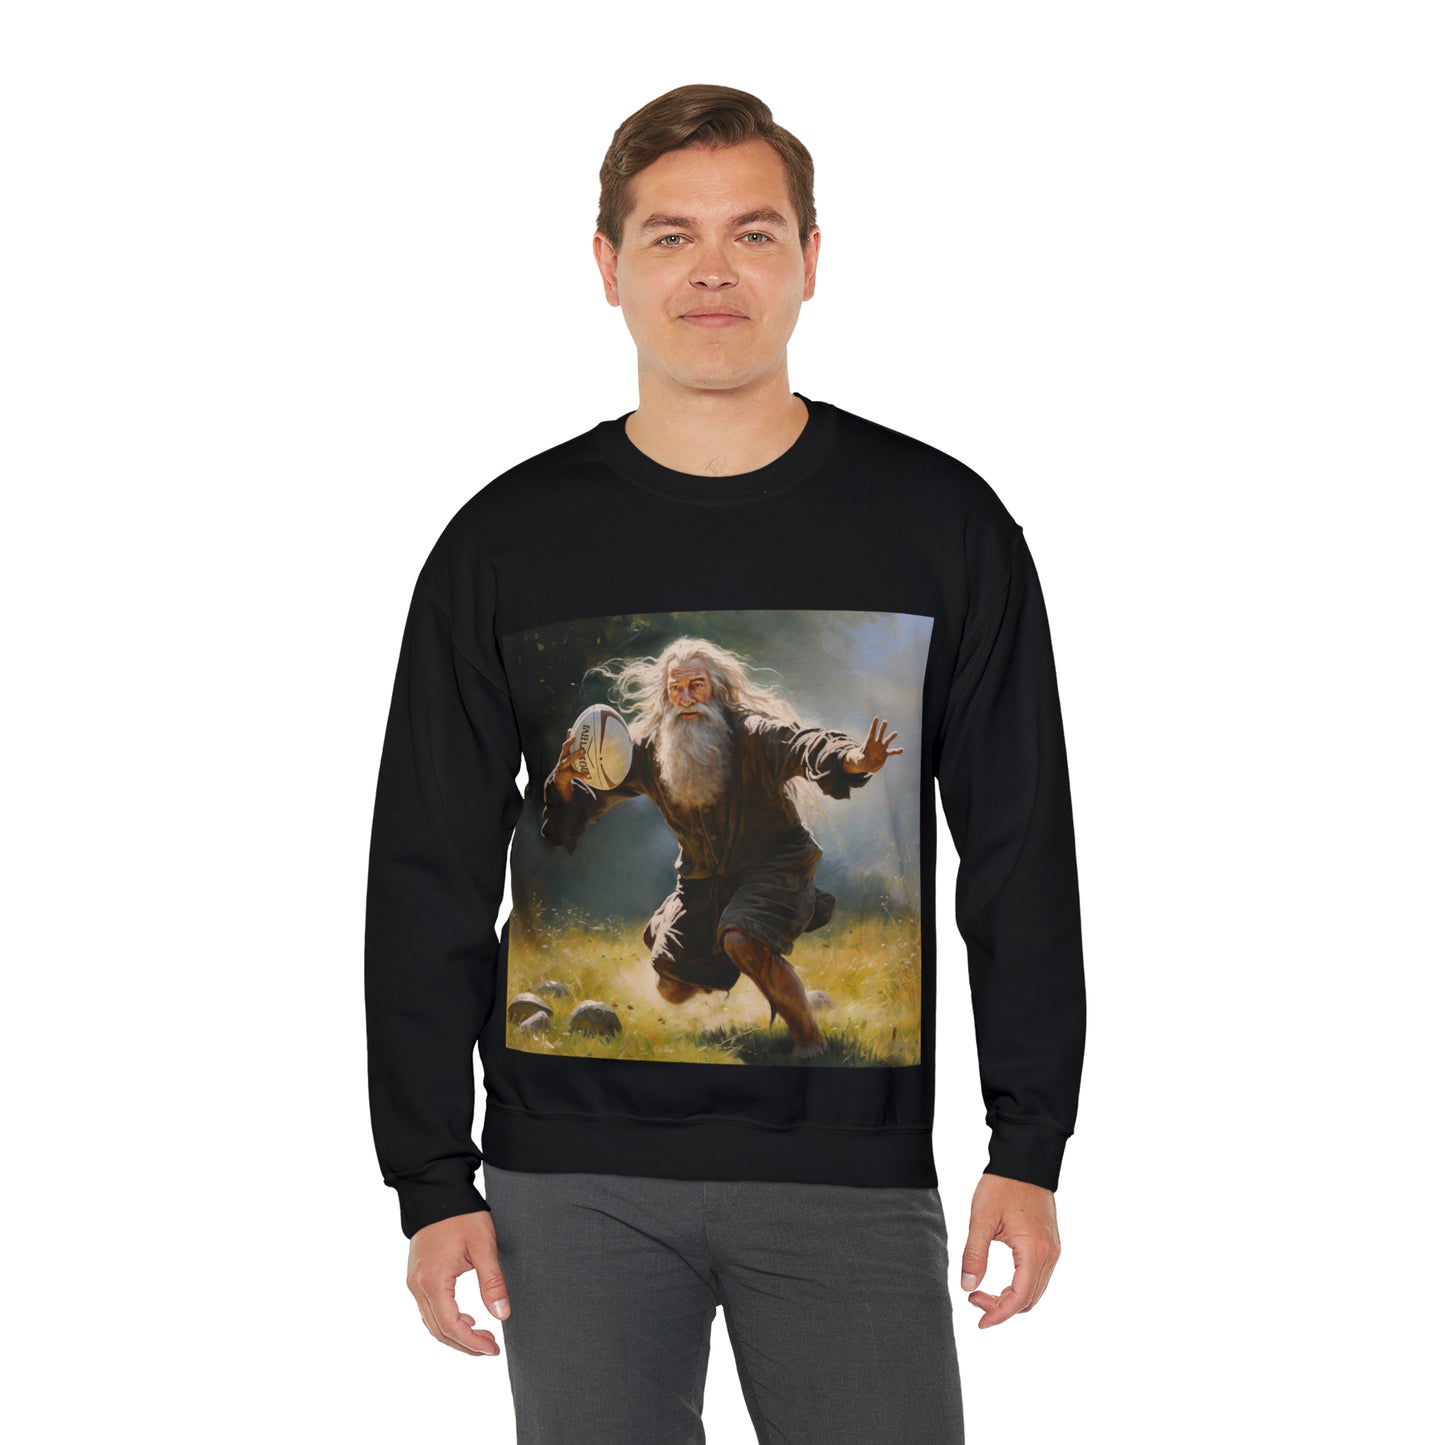 Rugby Gandalf - black sweatshirt